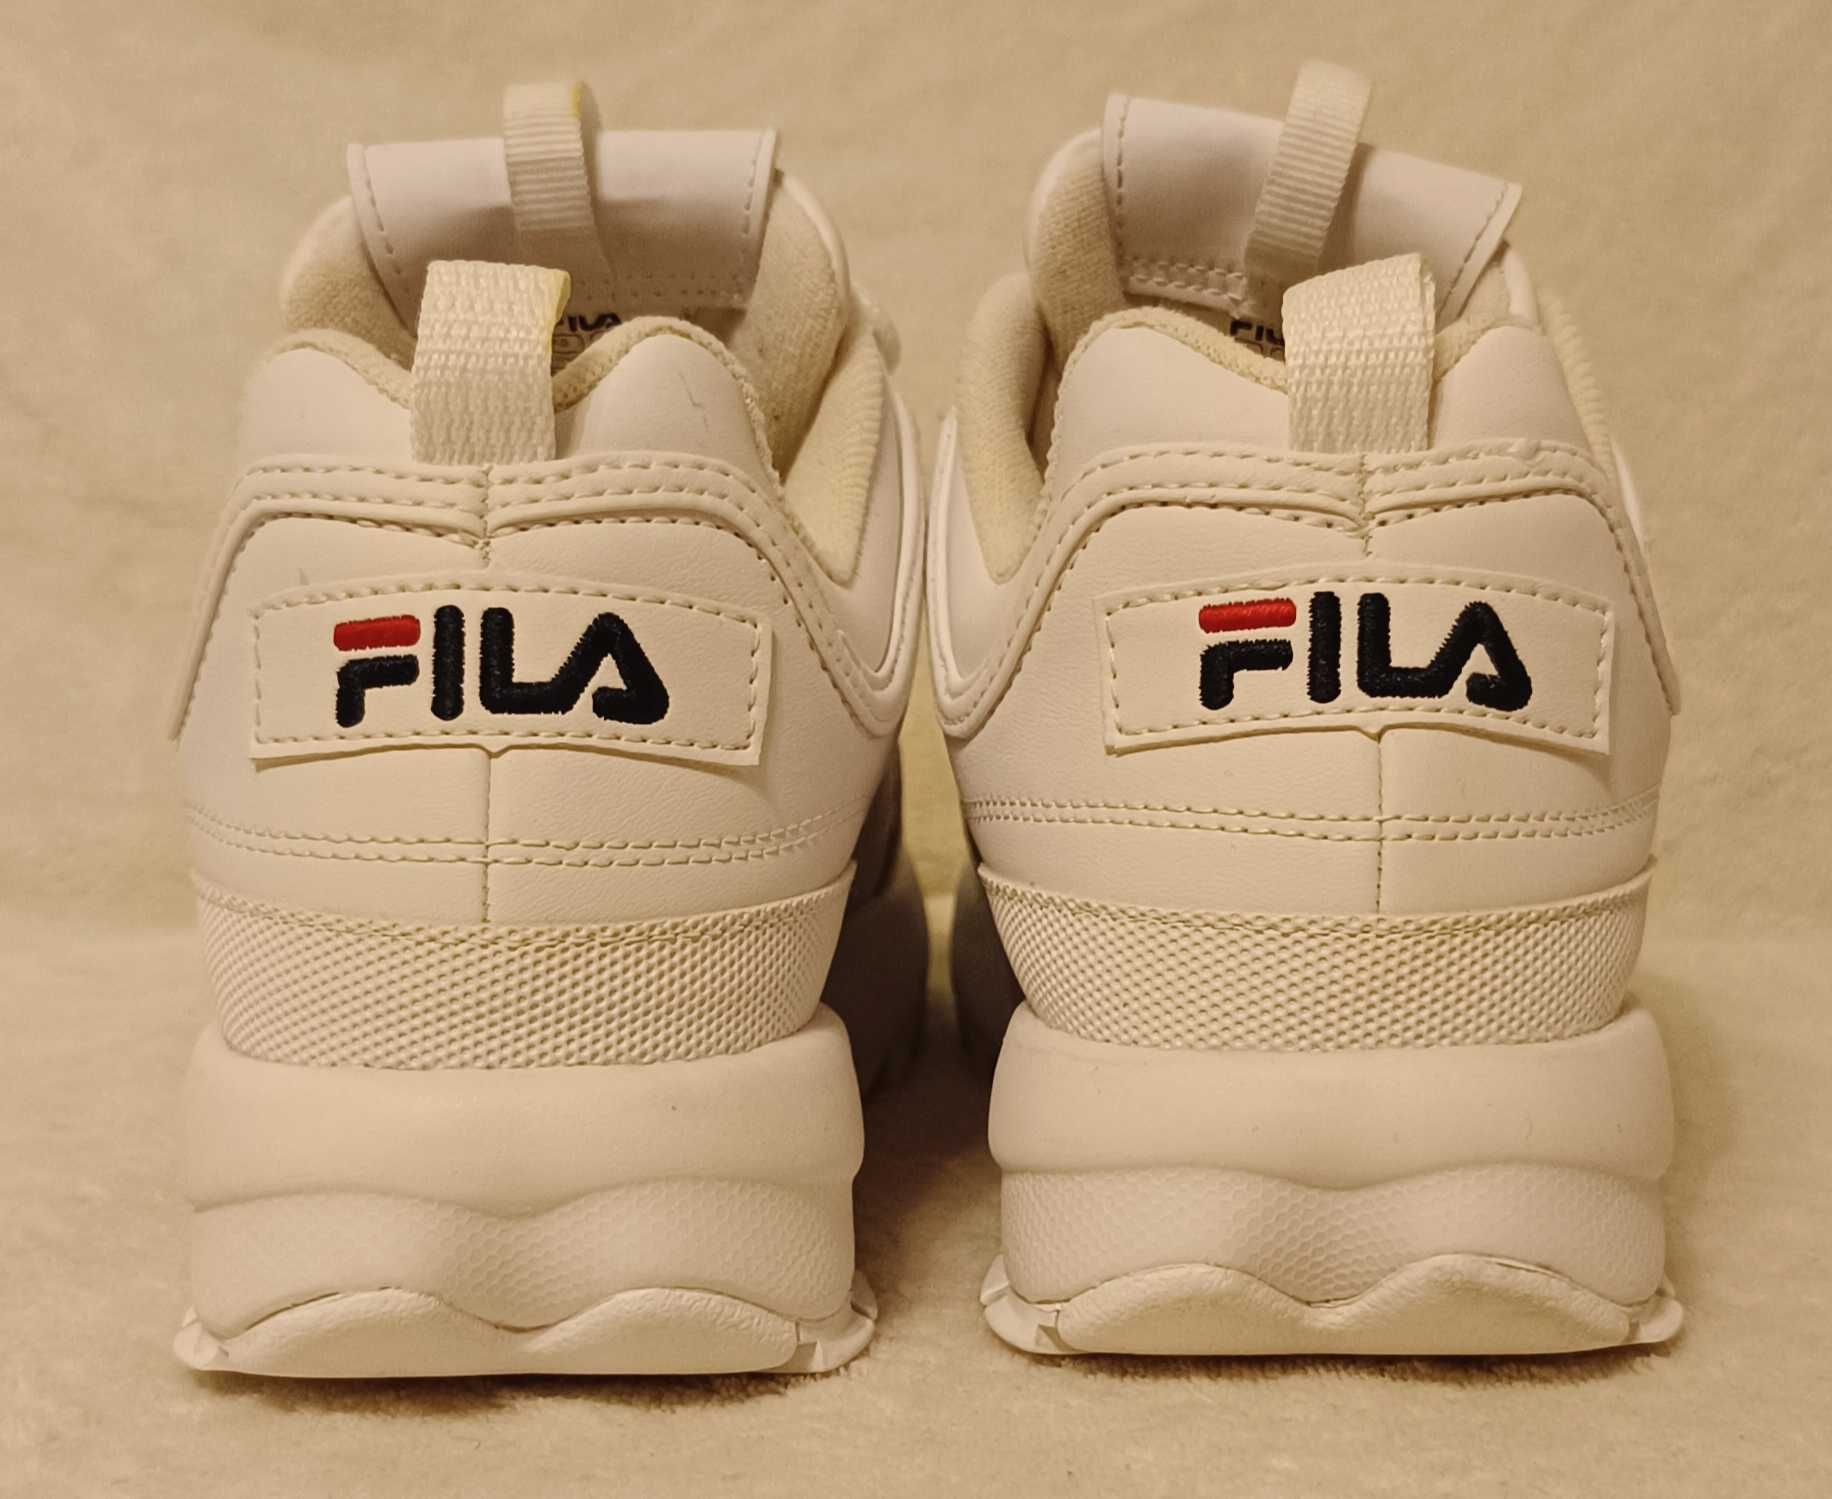 Sneakers dama FILA Disruptor Low Wmn 1010302.1FG White - nr.41